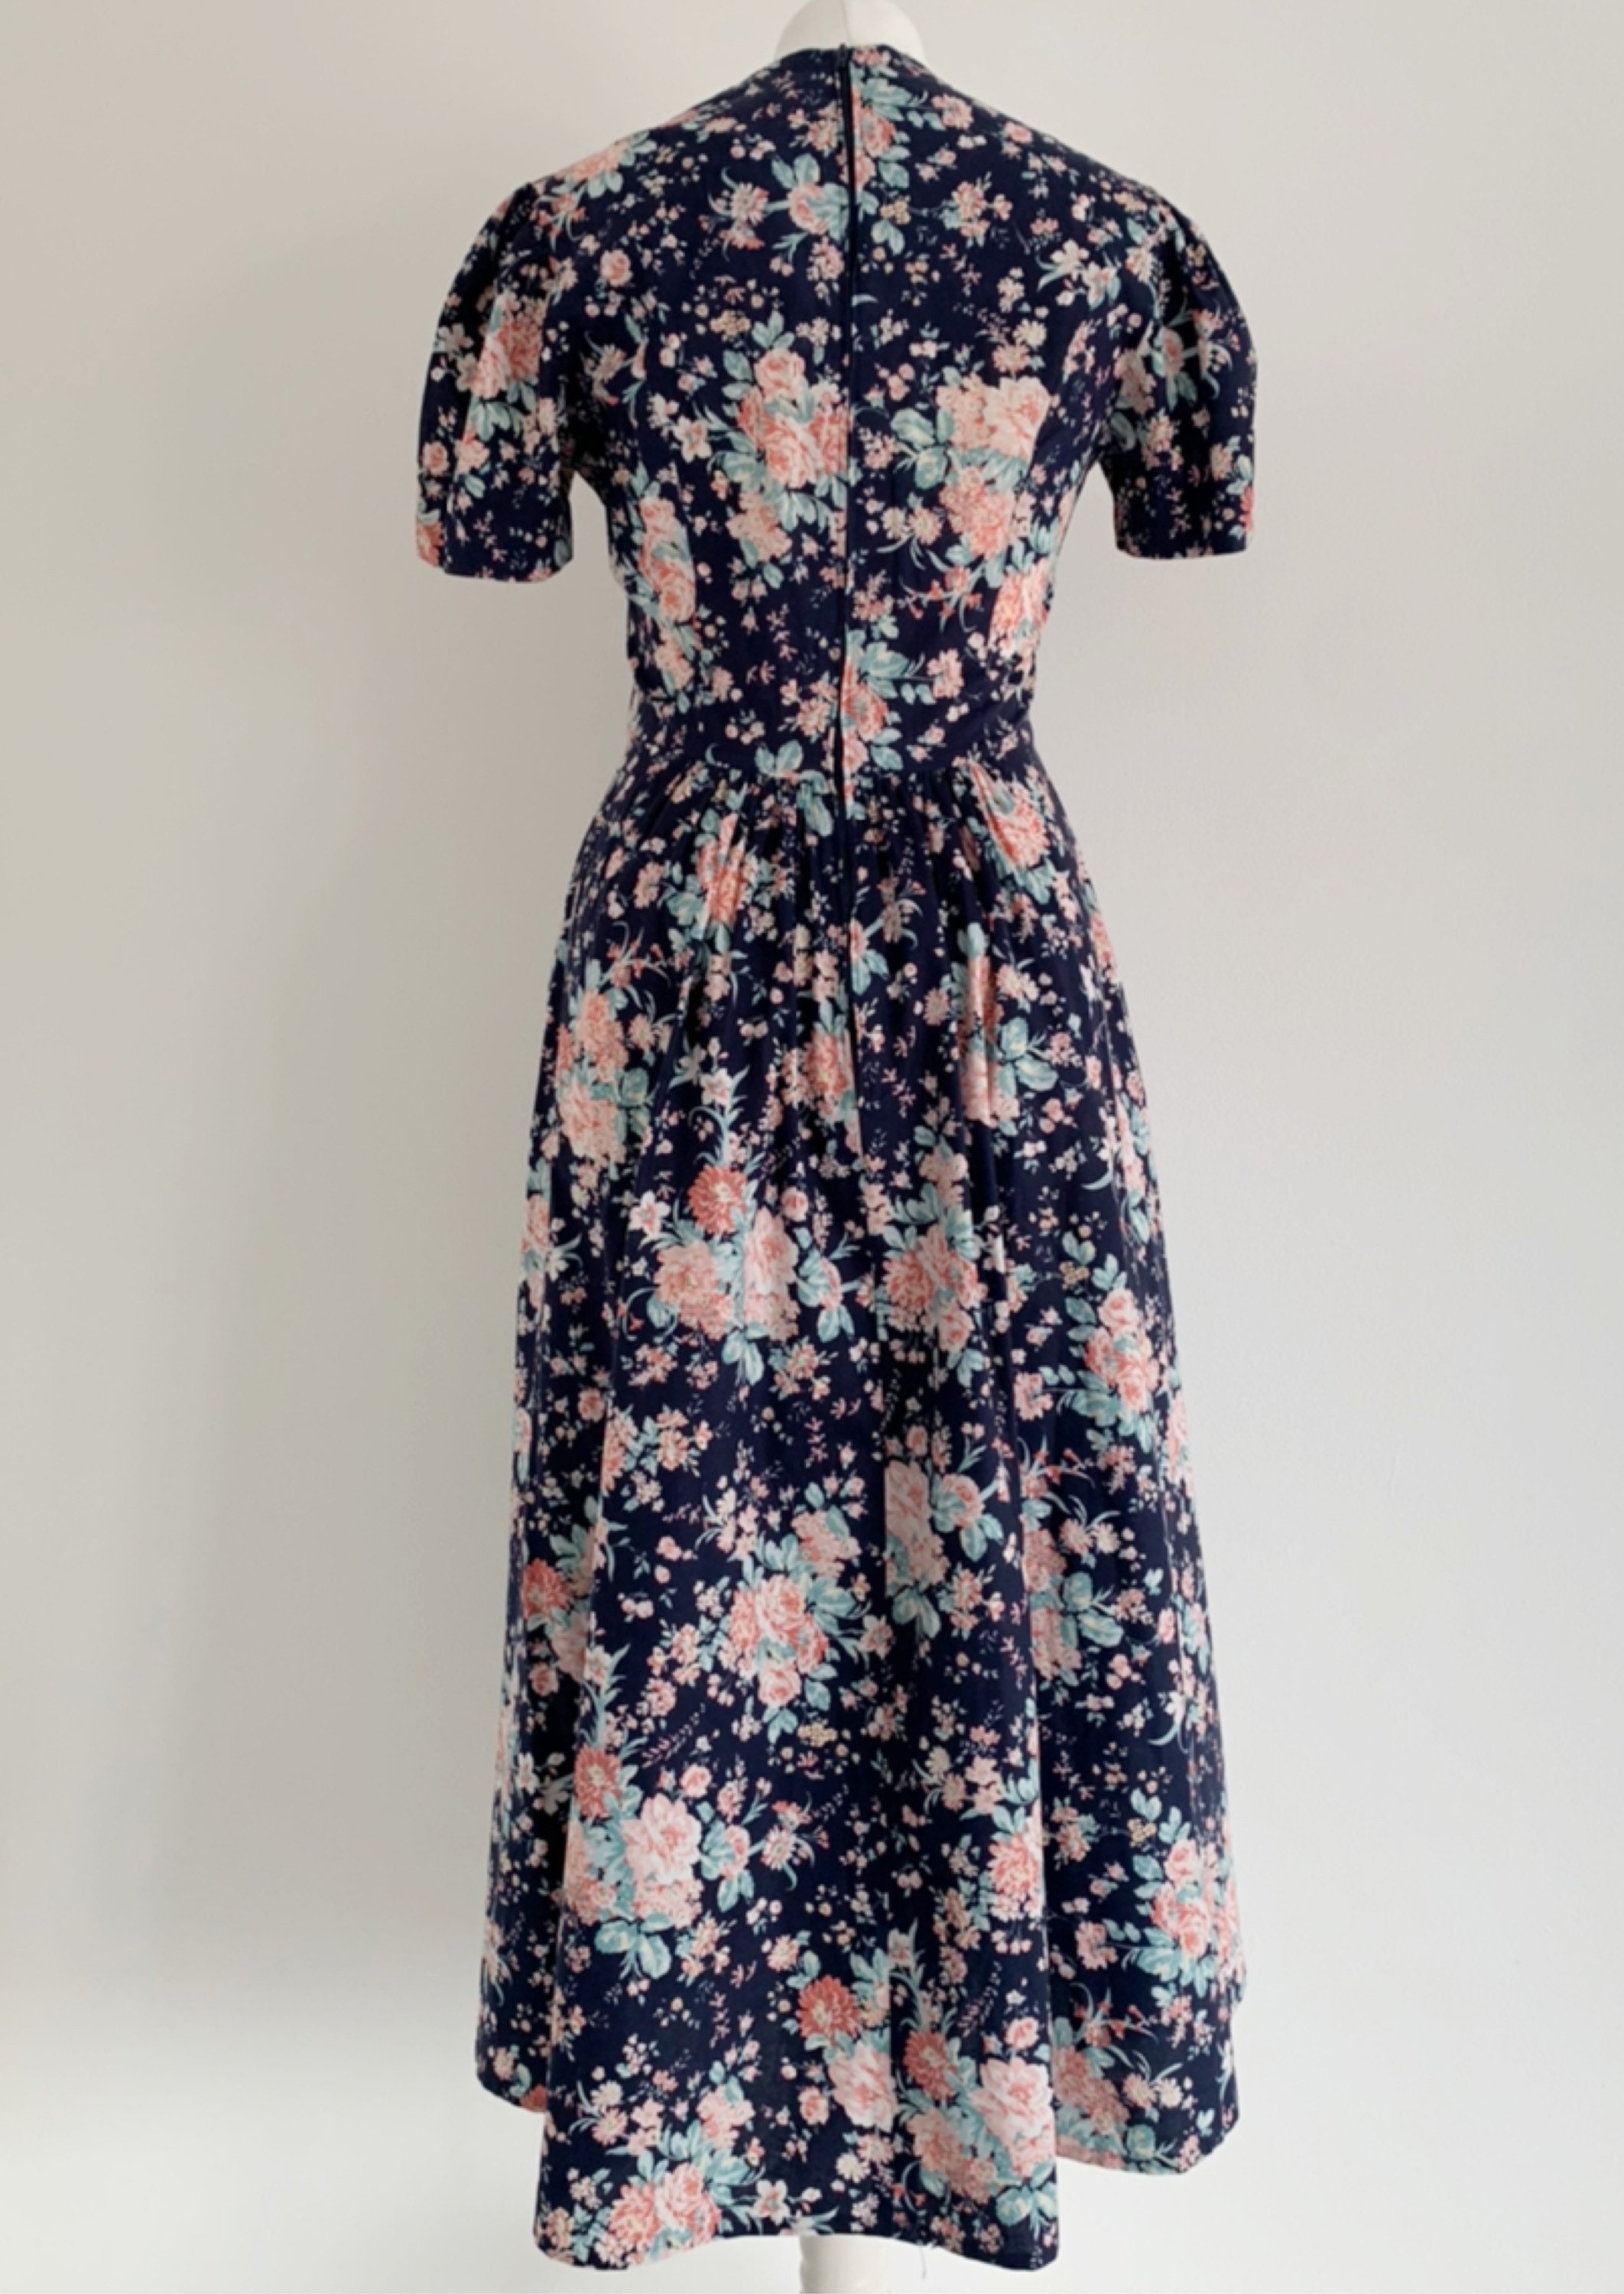 LAURA ASHLEY Navy Floral Cottagecore Summer Vintage 80s Dress | Etsy